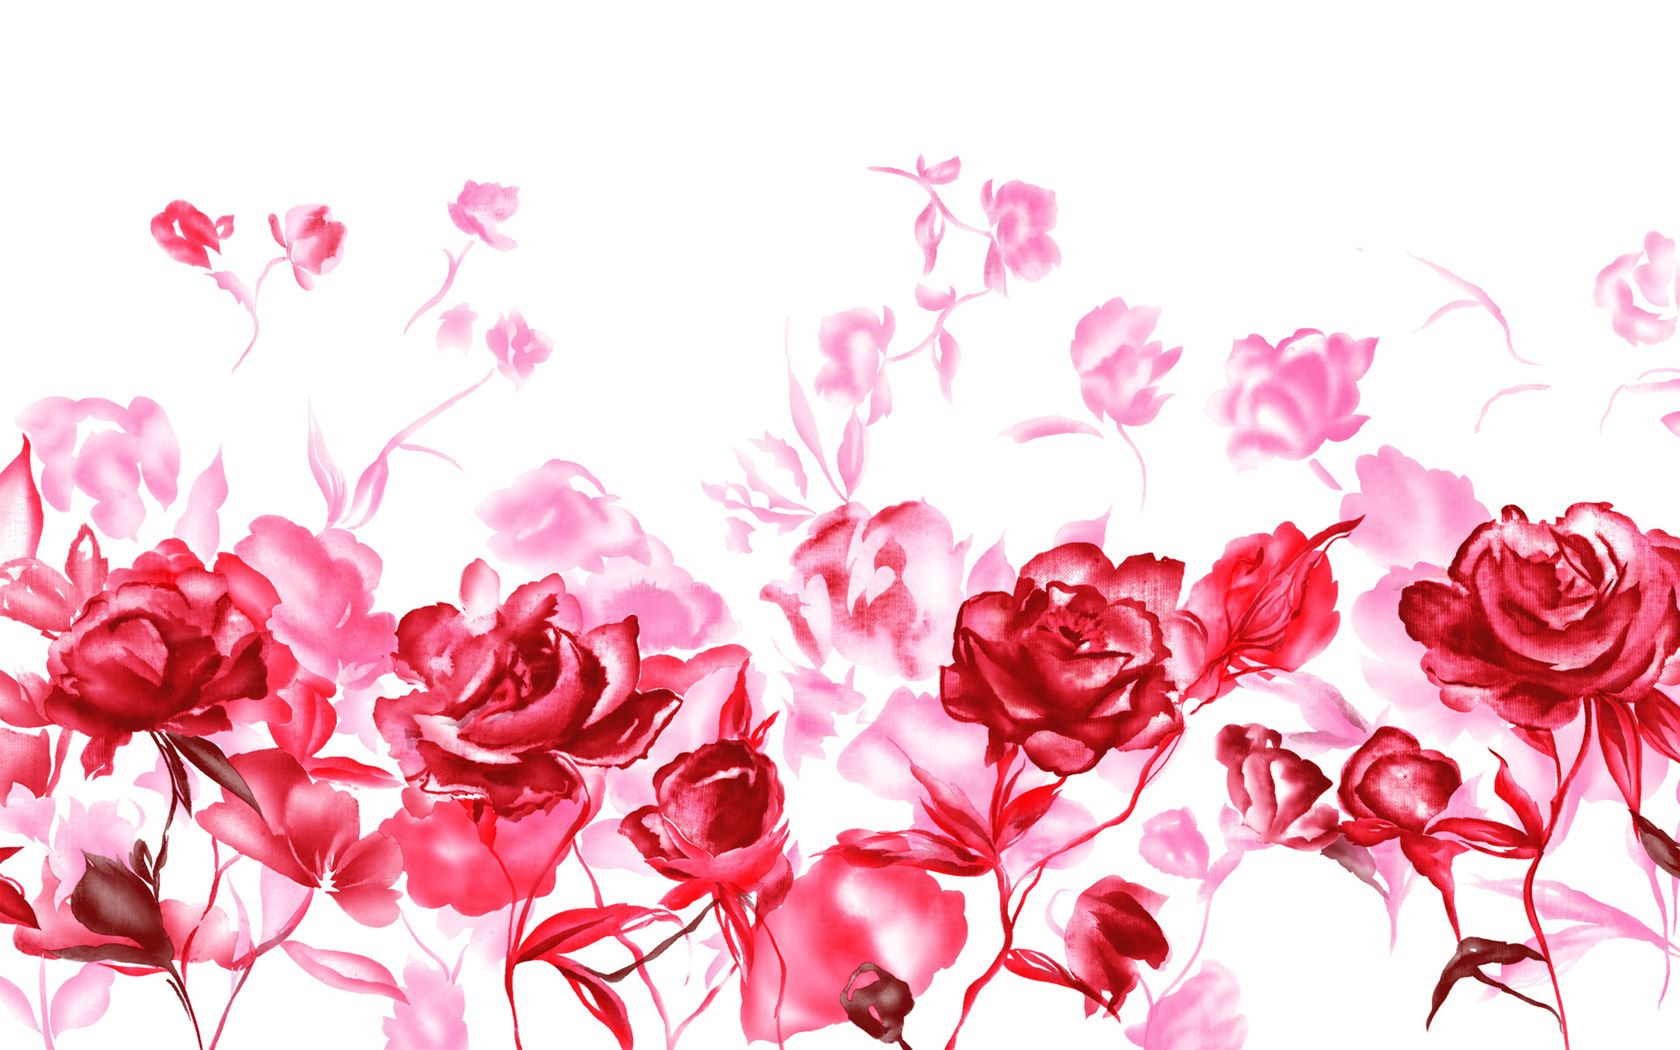 Beautiful valentines day desktop wallpaper for Windows 10 | All ...